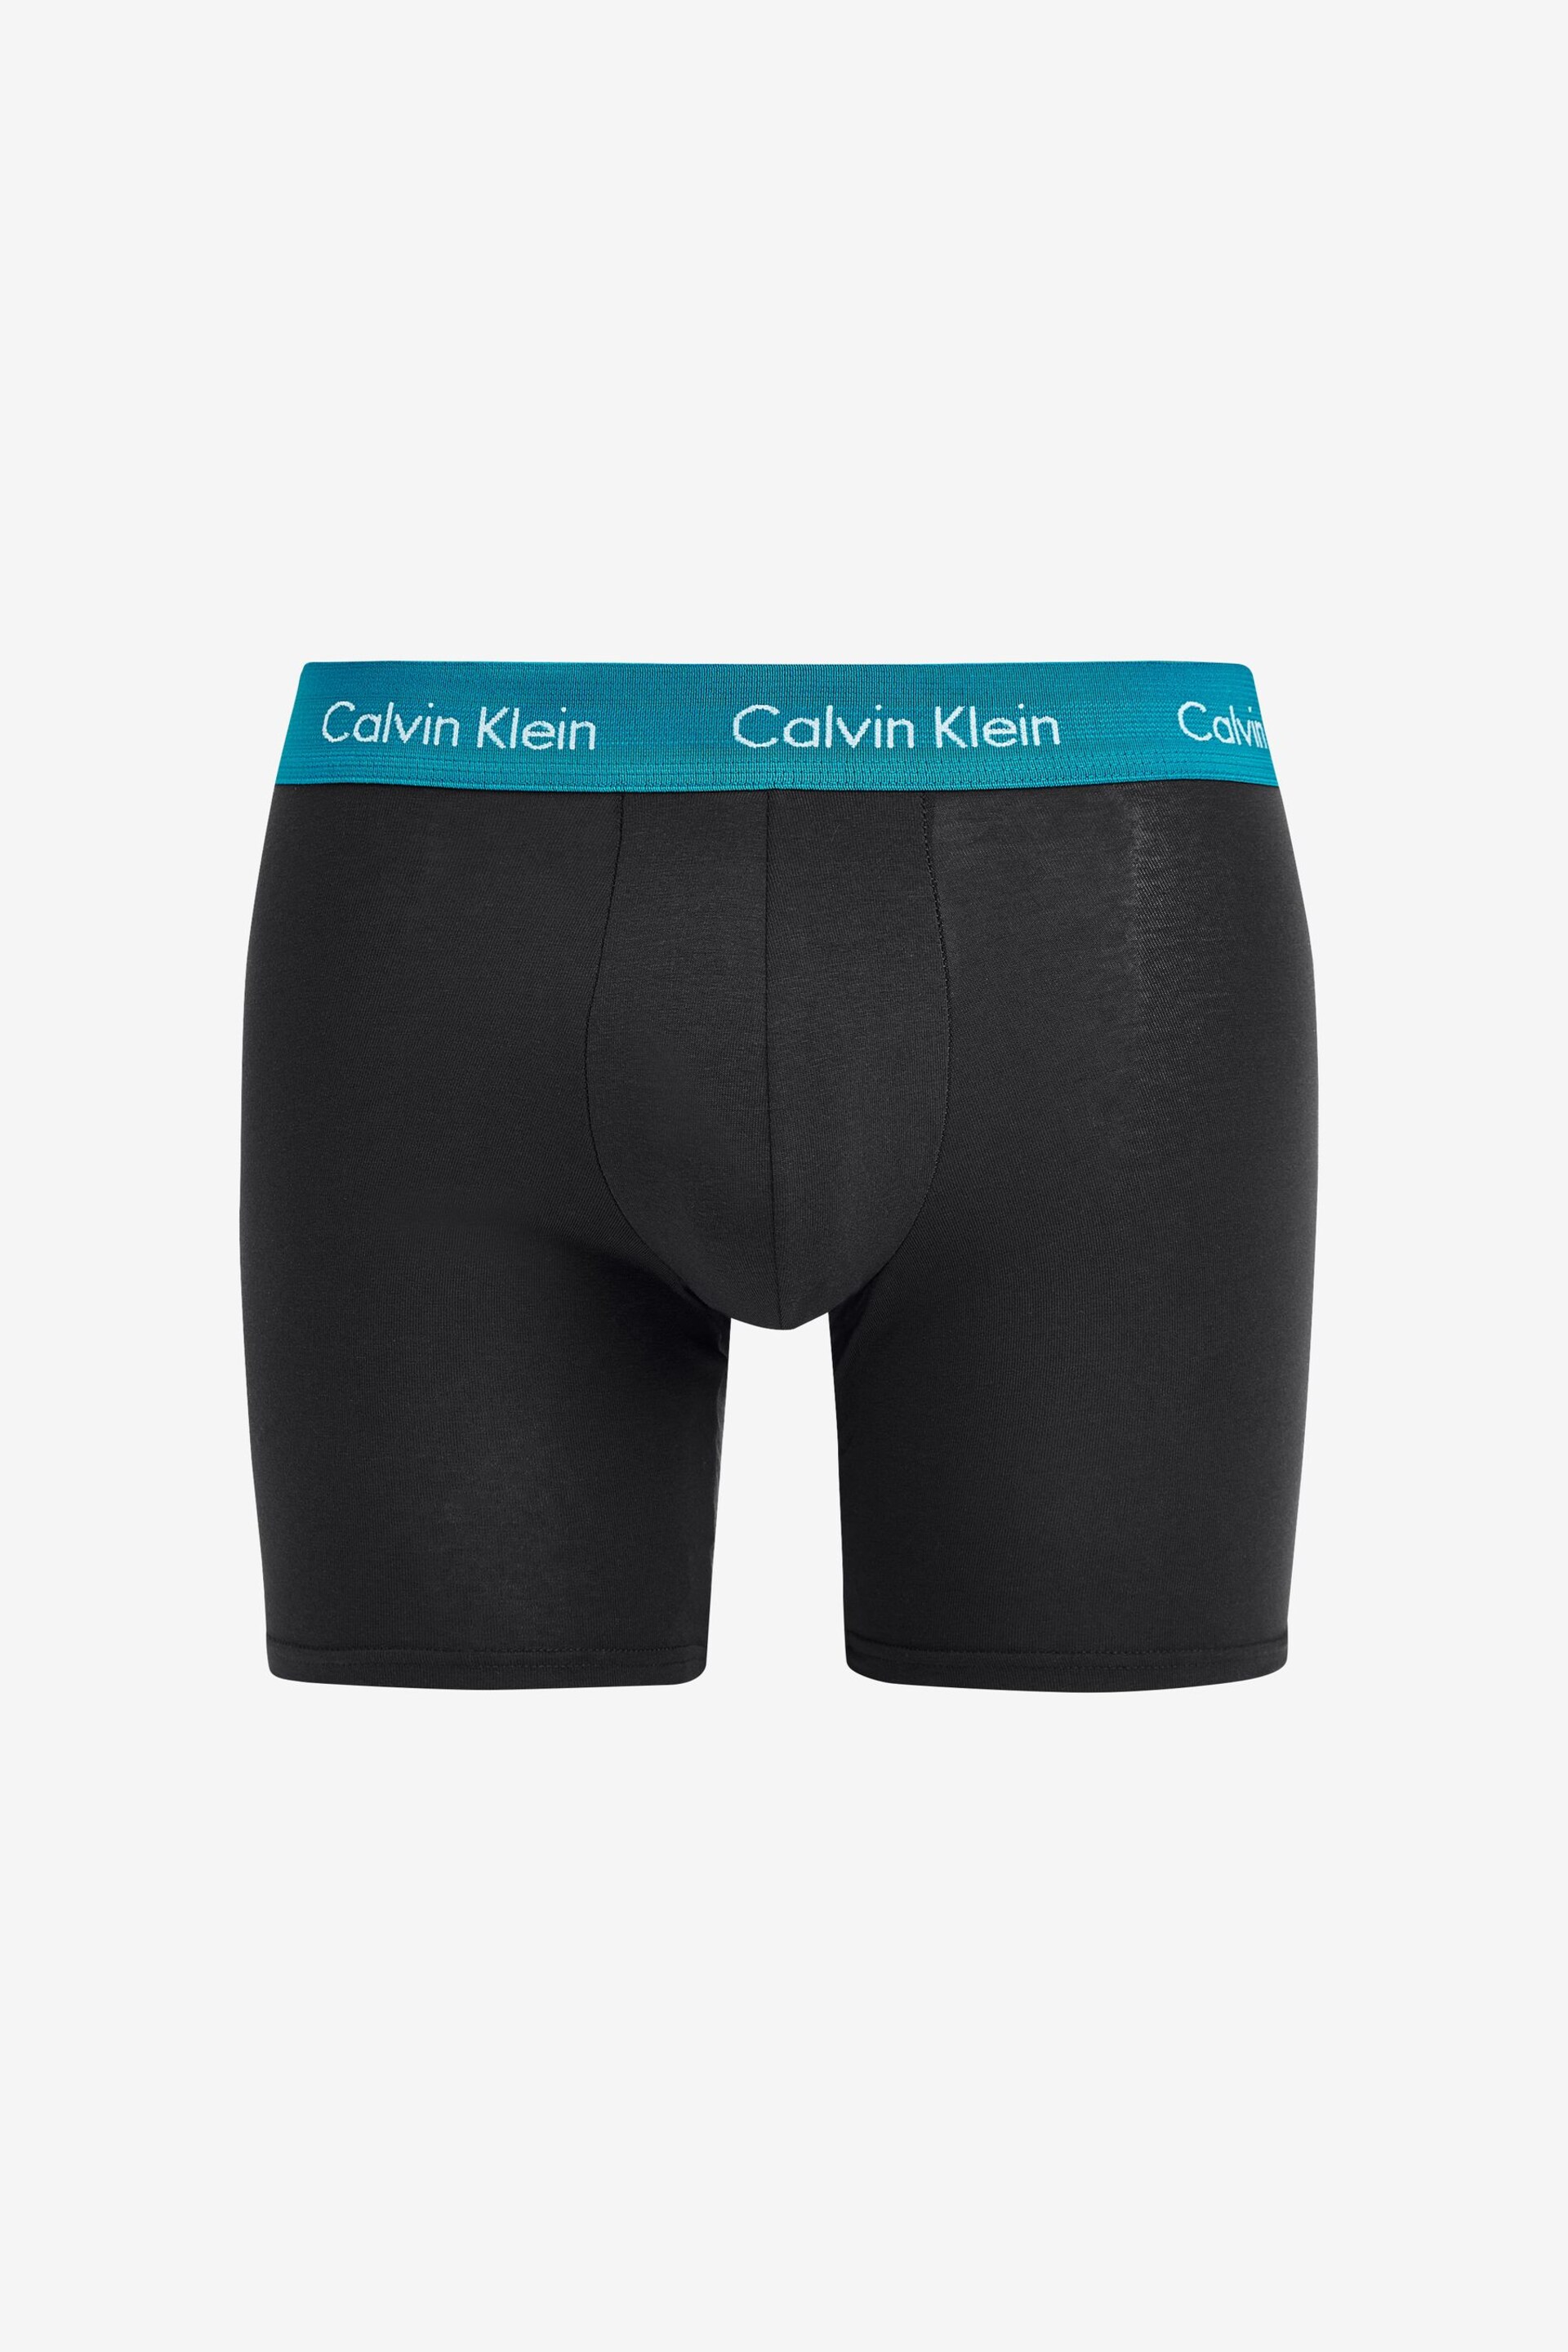 Calvin Klein Black Boxers 3 Pack - Image 3 of 4